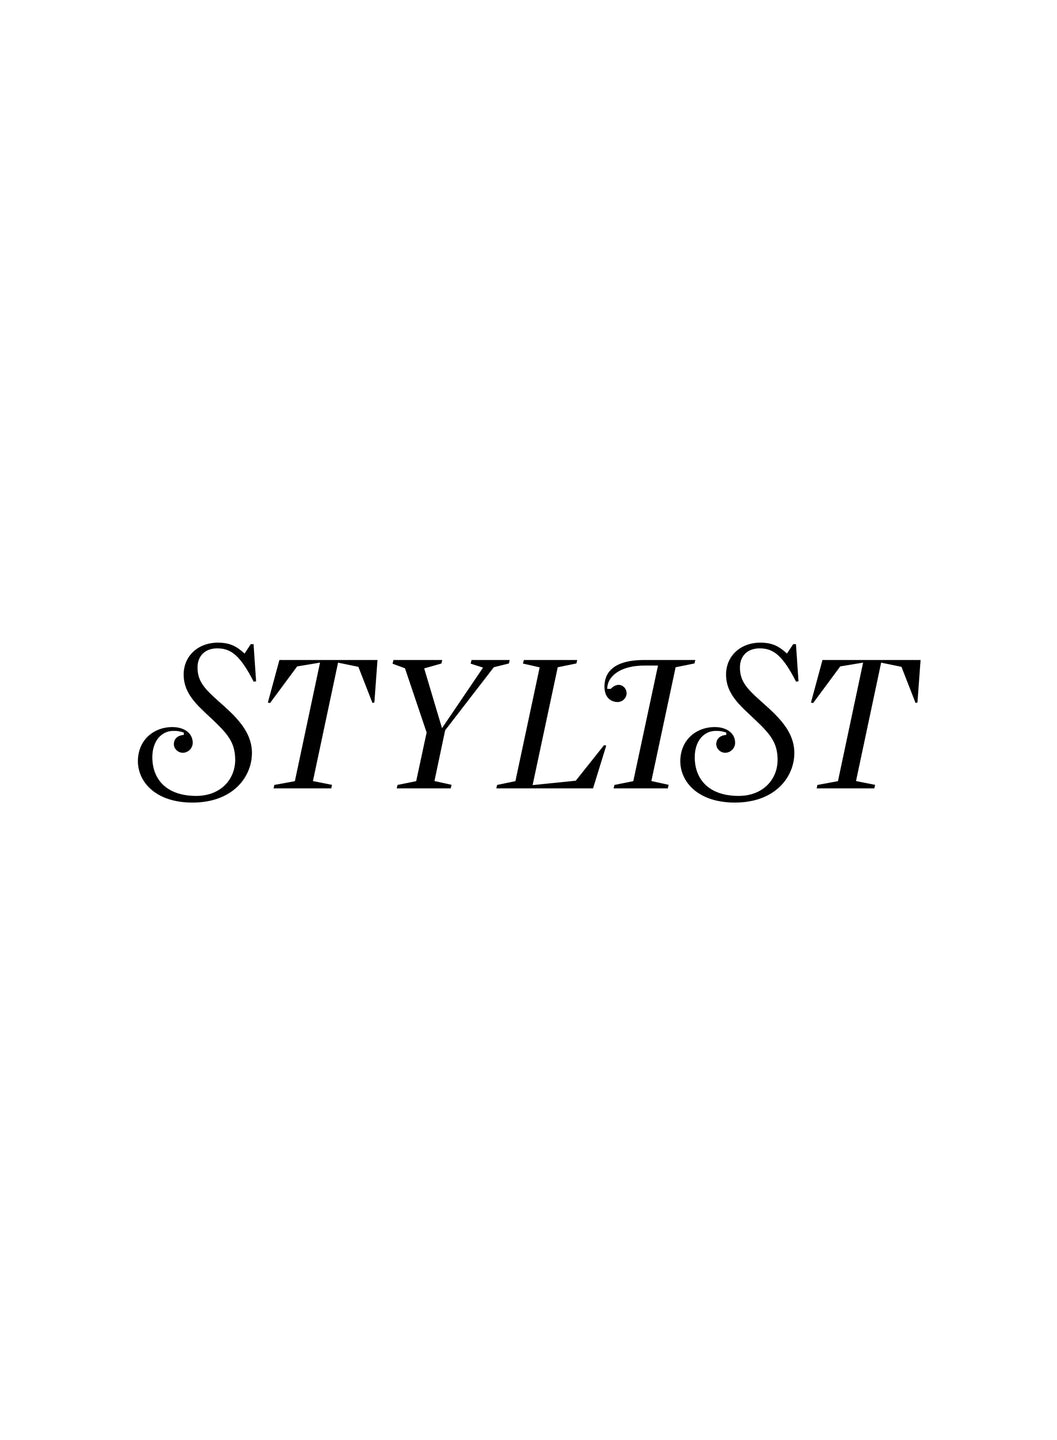 Stylist - January 30th